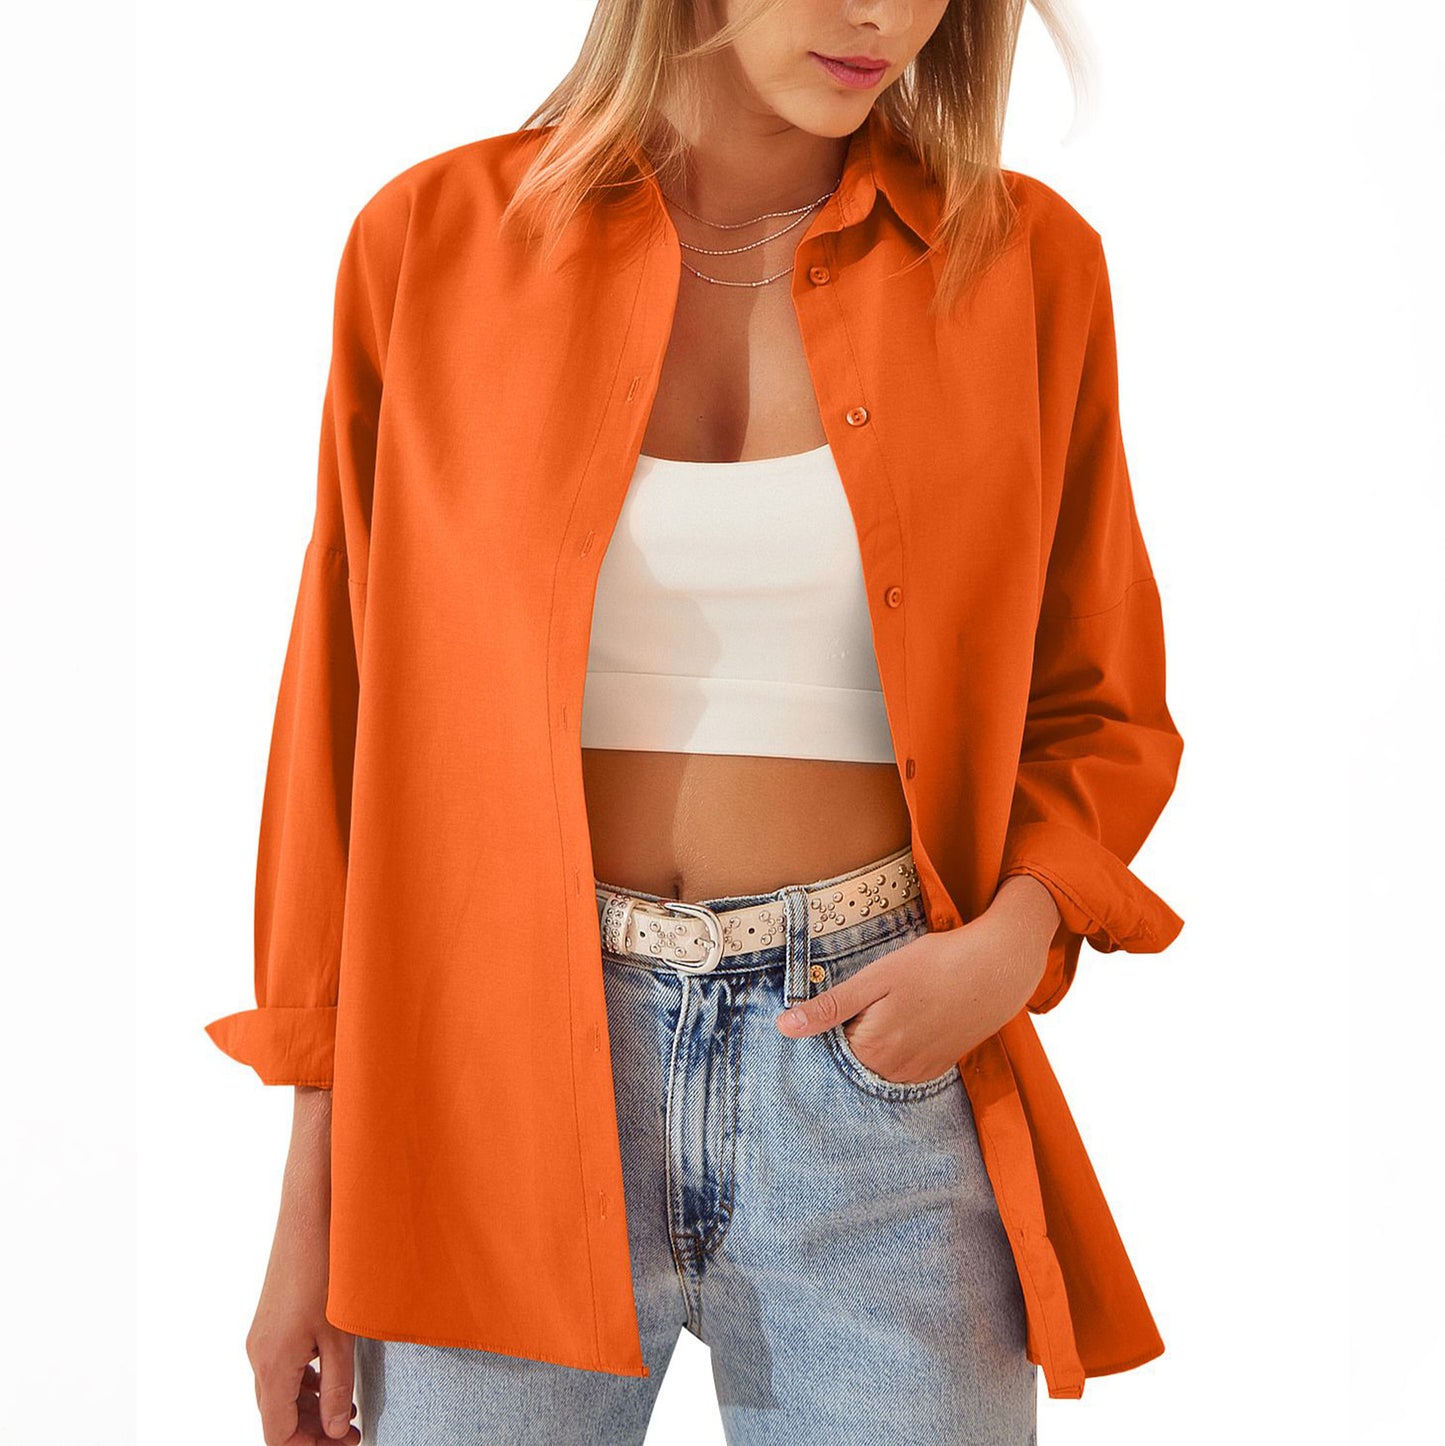 Shirt  | Women's Shirt Jacket Long Sleeve Blouse Button Down Tops Candy Color Shirt | Orange |  2XL| thecurvestory.myshopify.com